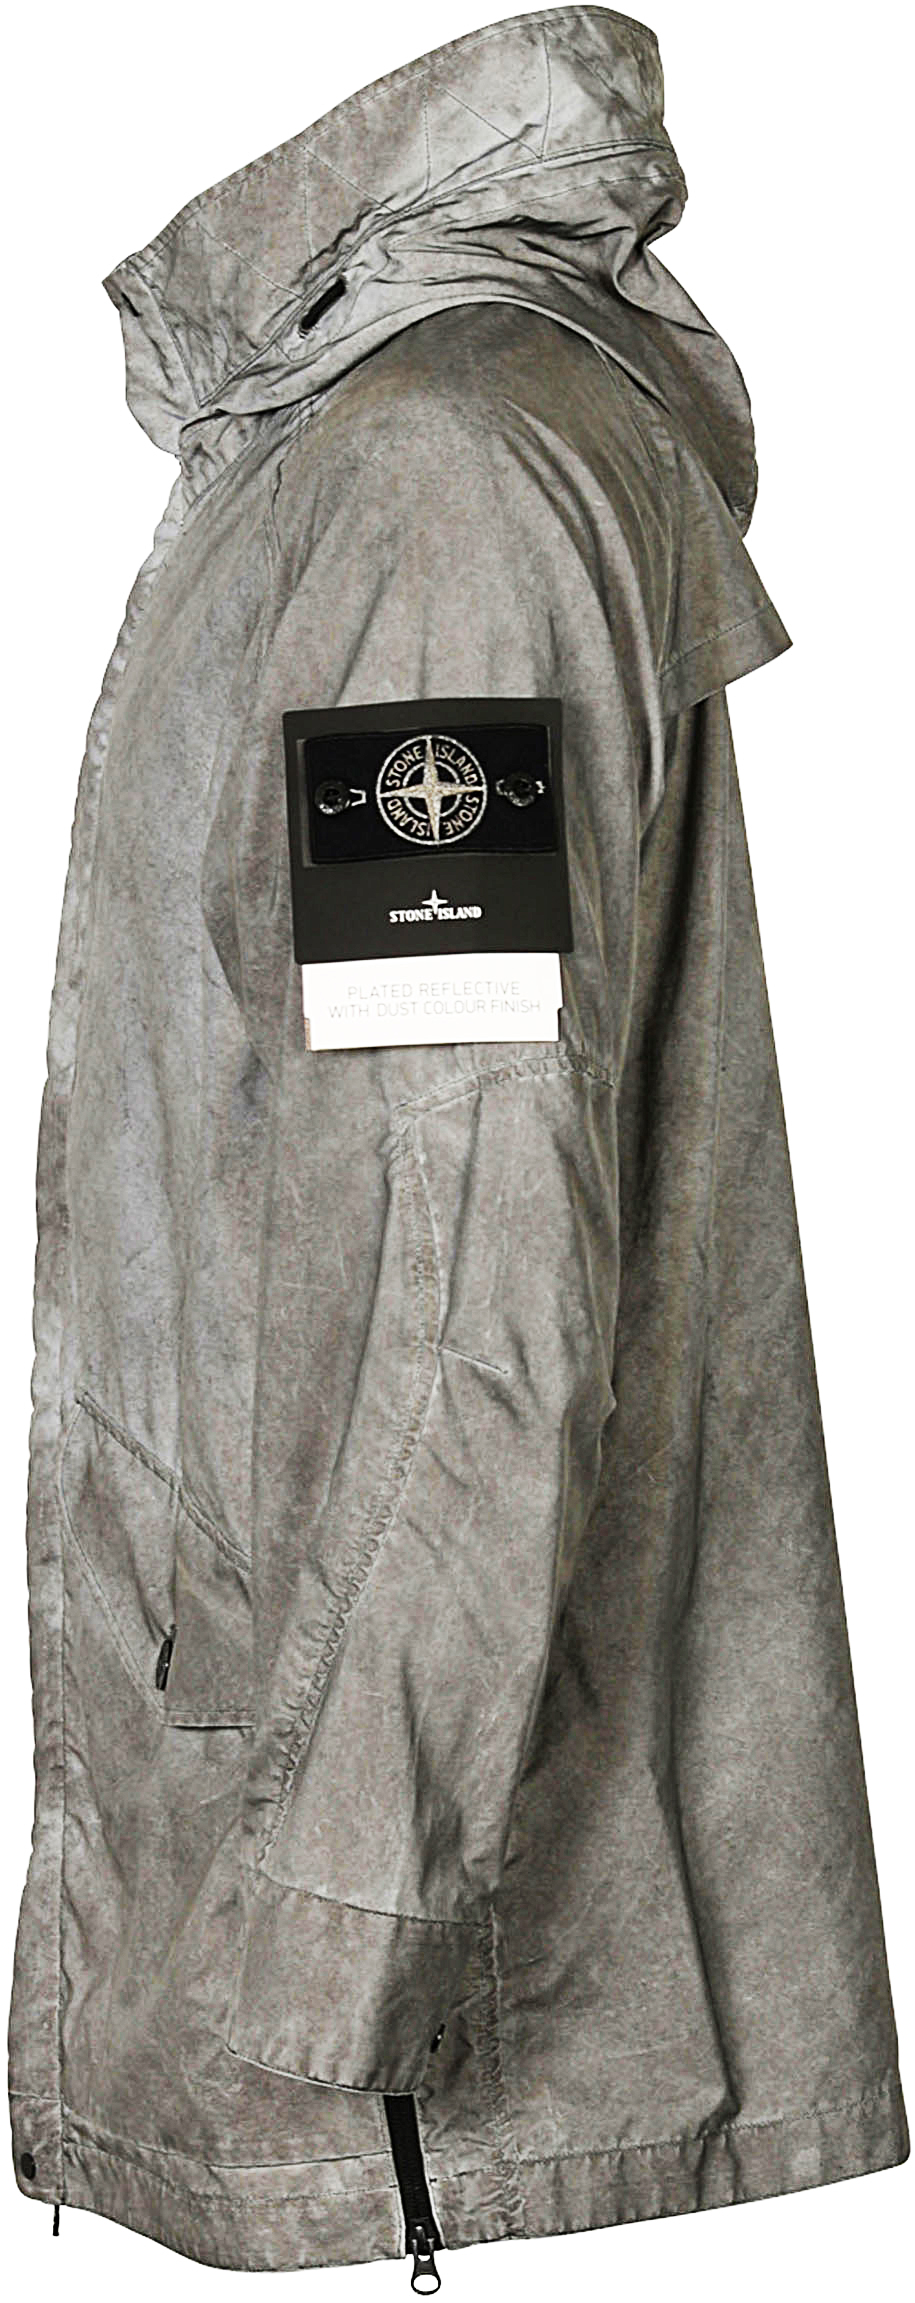 Stone Island Jacket Reflective Grey S